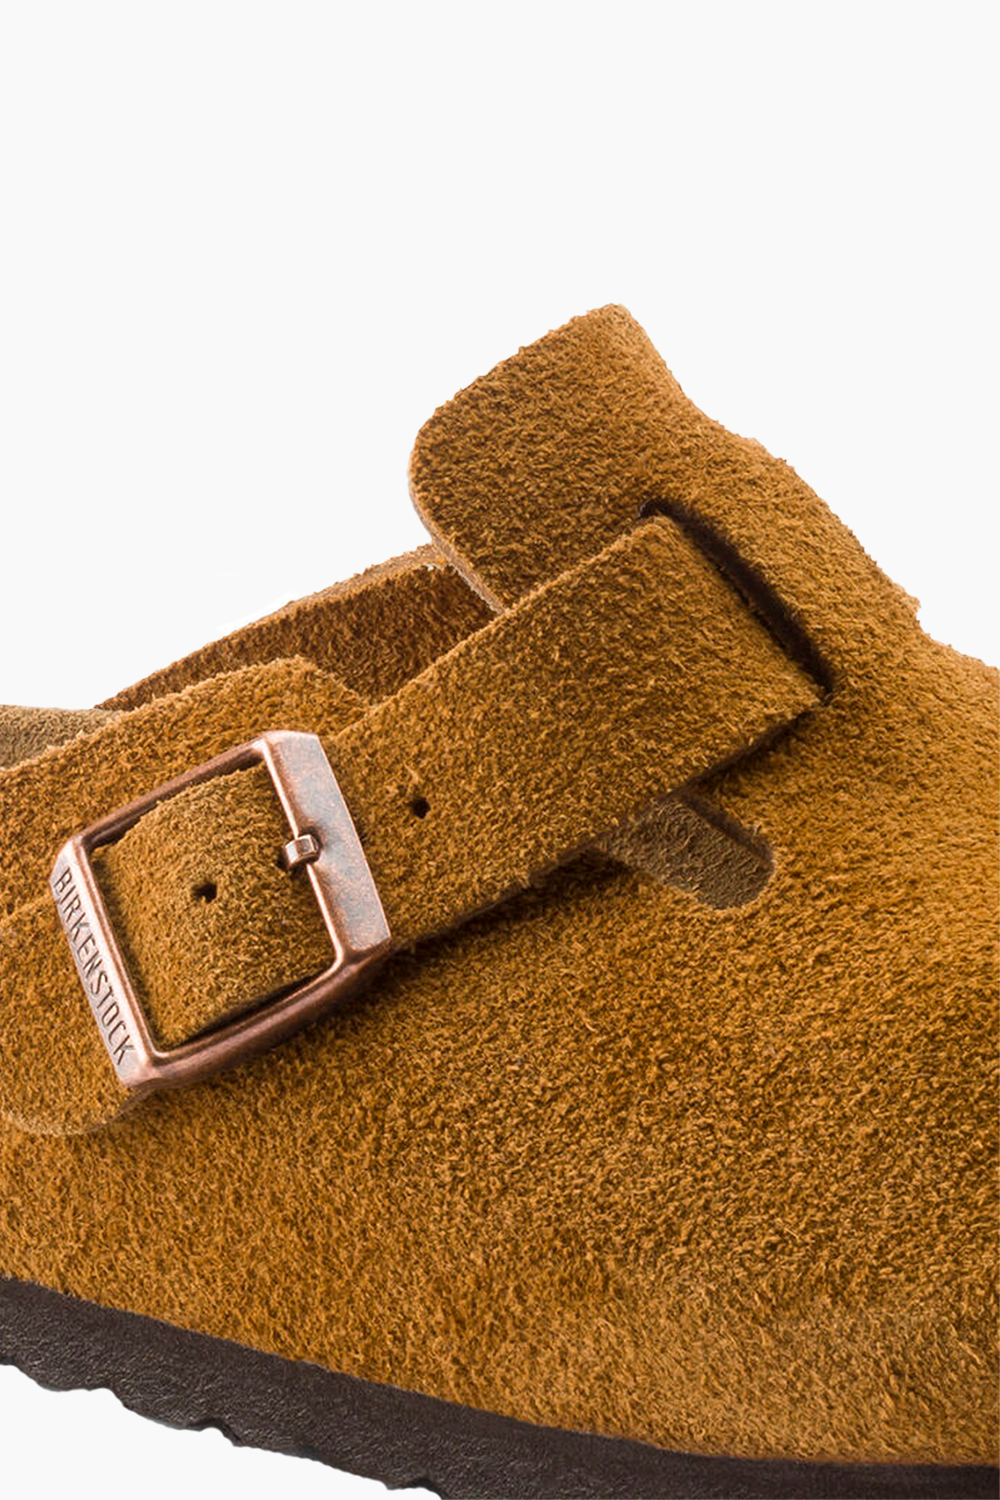 Birkenstock Boston Soft Footbed Suede Leather in Mink (Narrow)